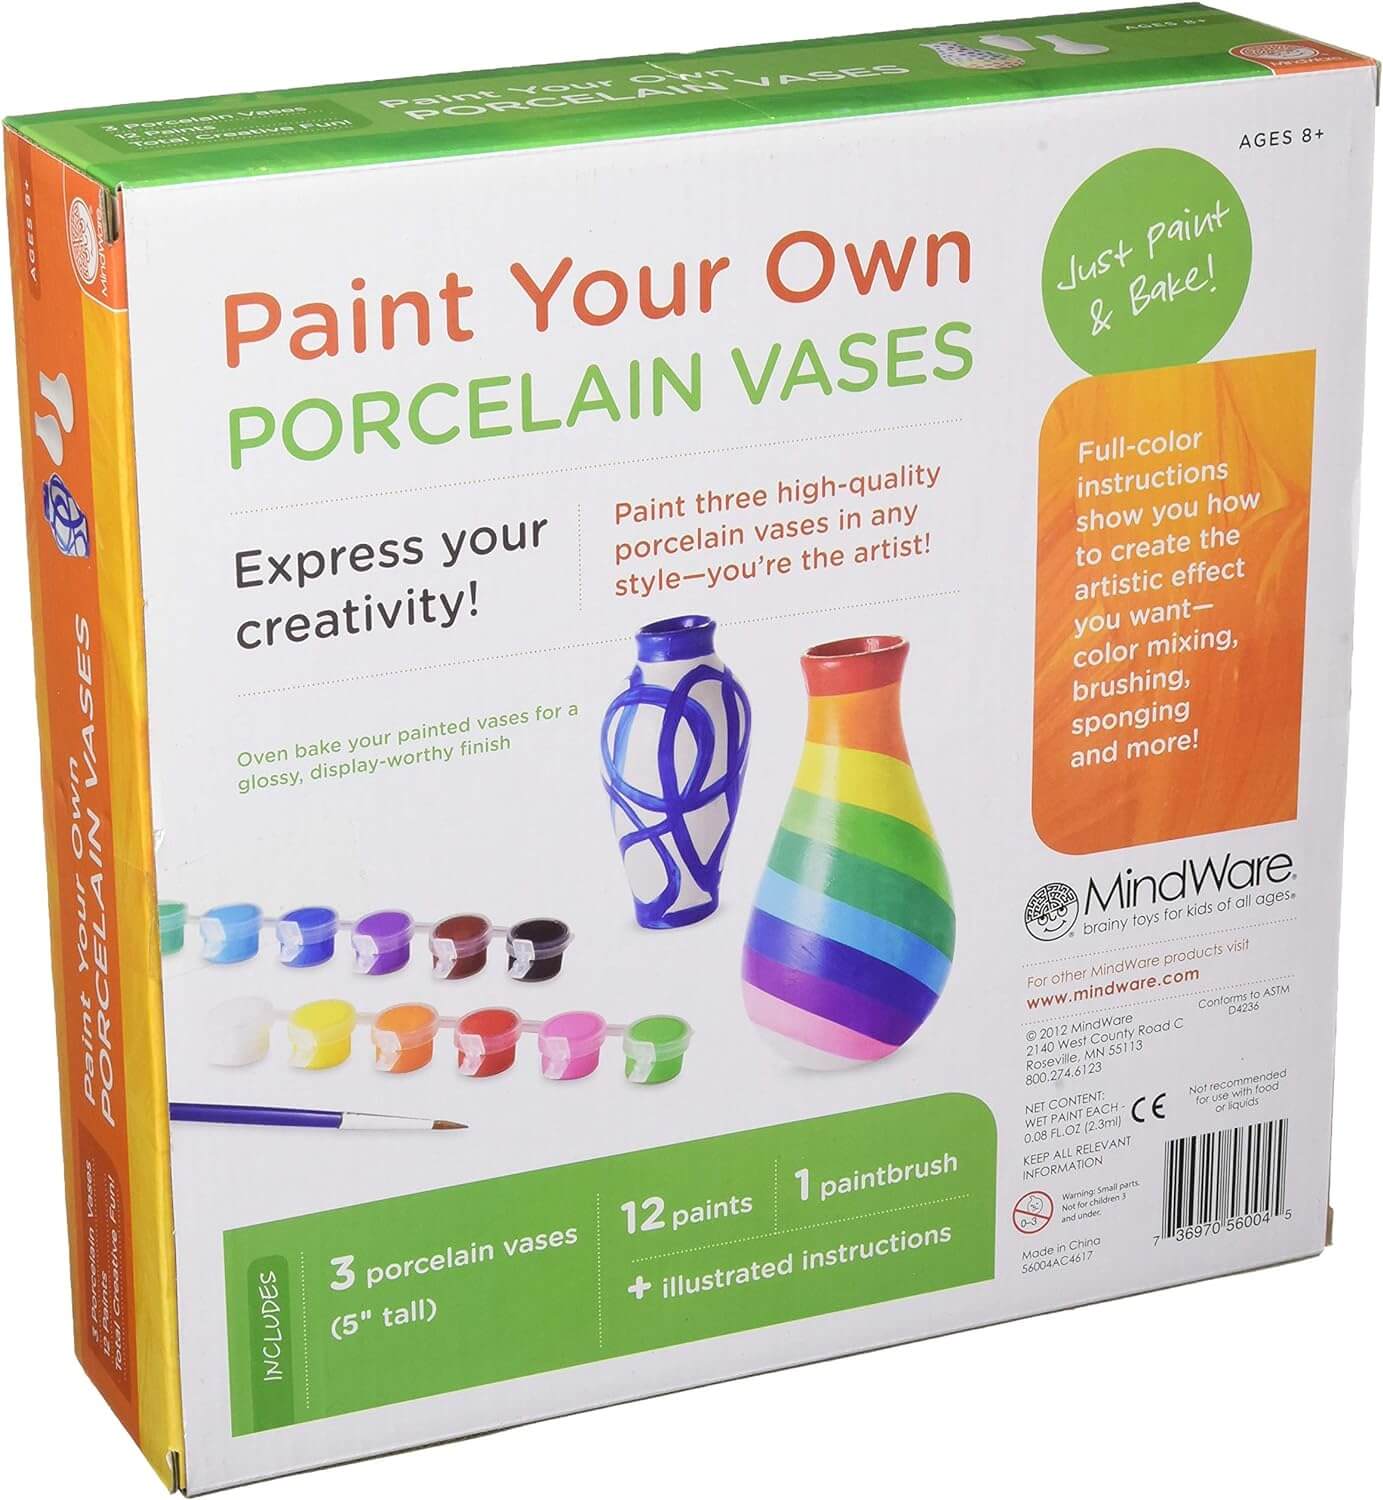 Paint Your Own Porcelain Vases Kit